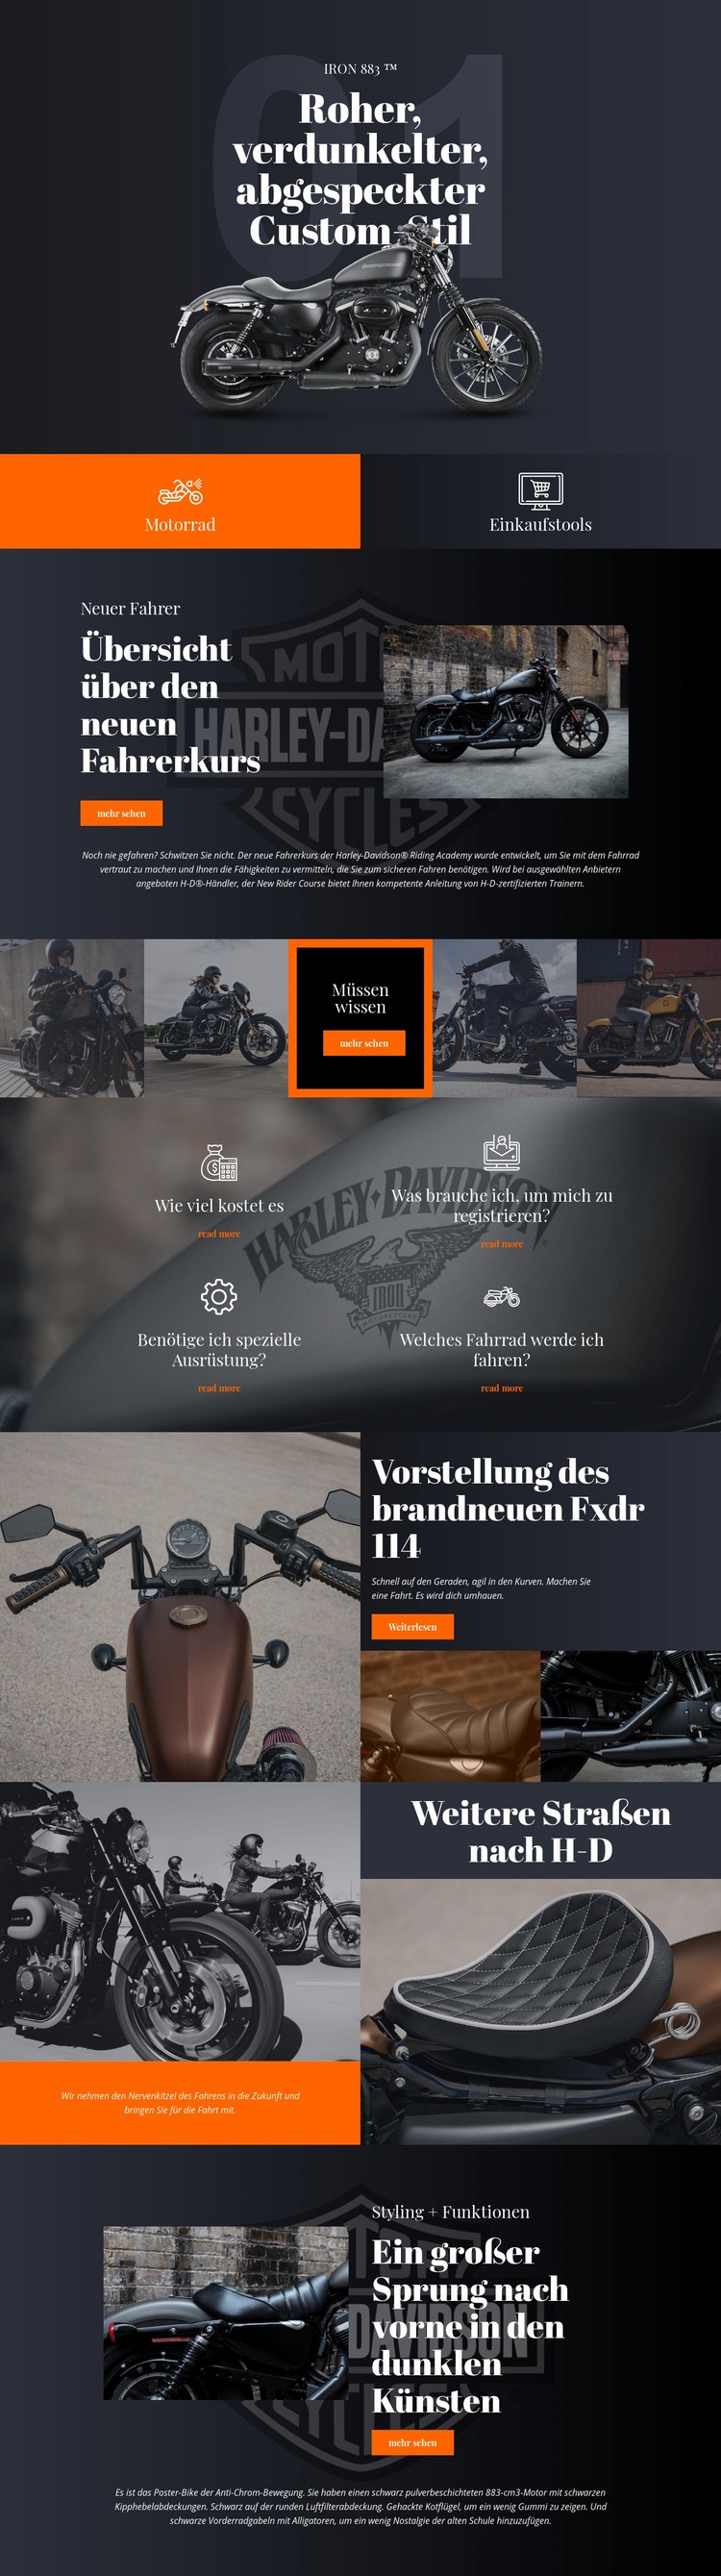 Harley Davidson HTML5-Vorlage